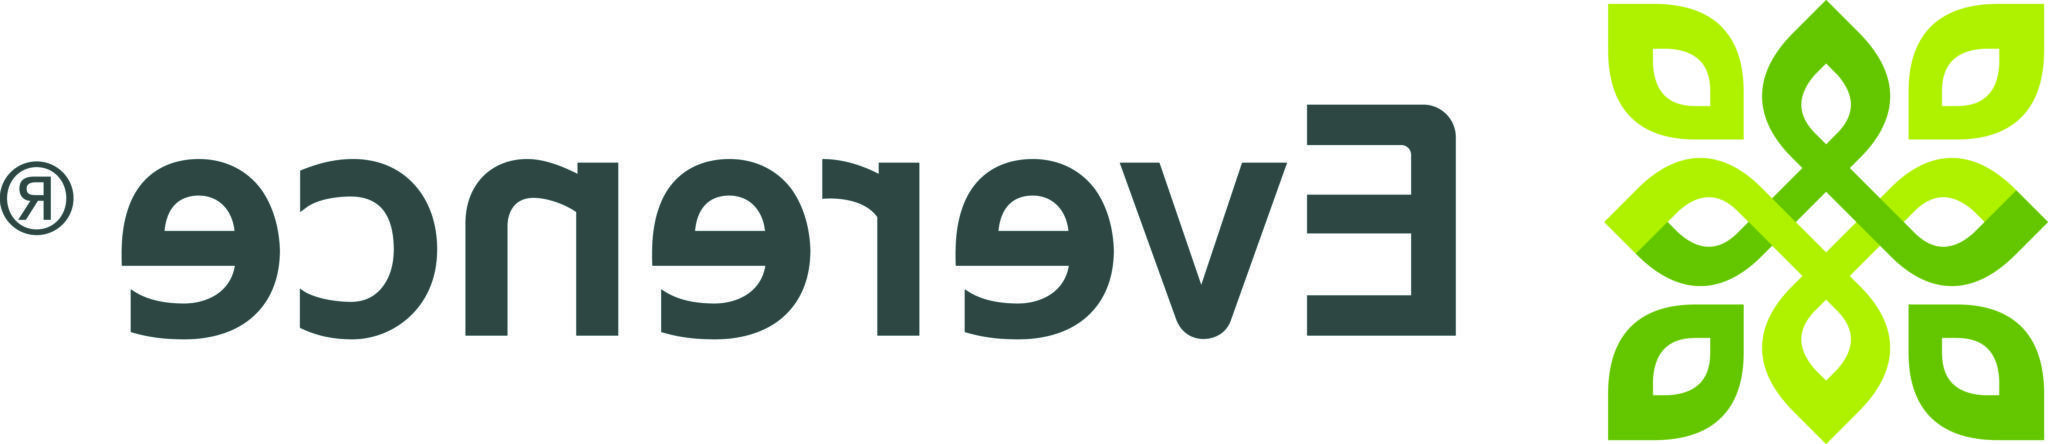 logotipo everence